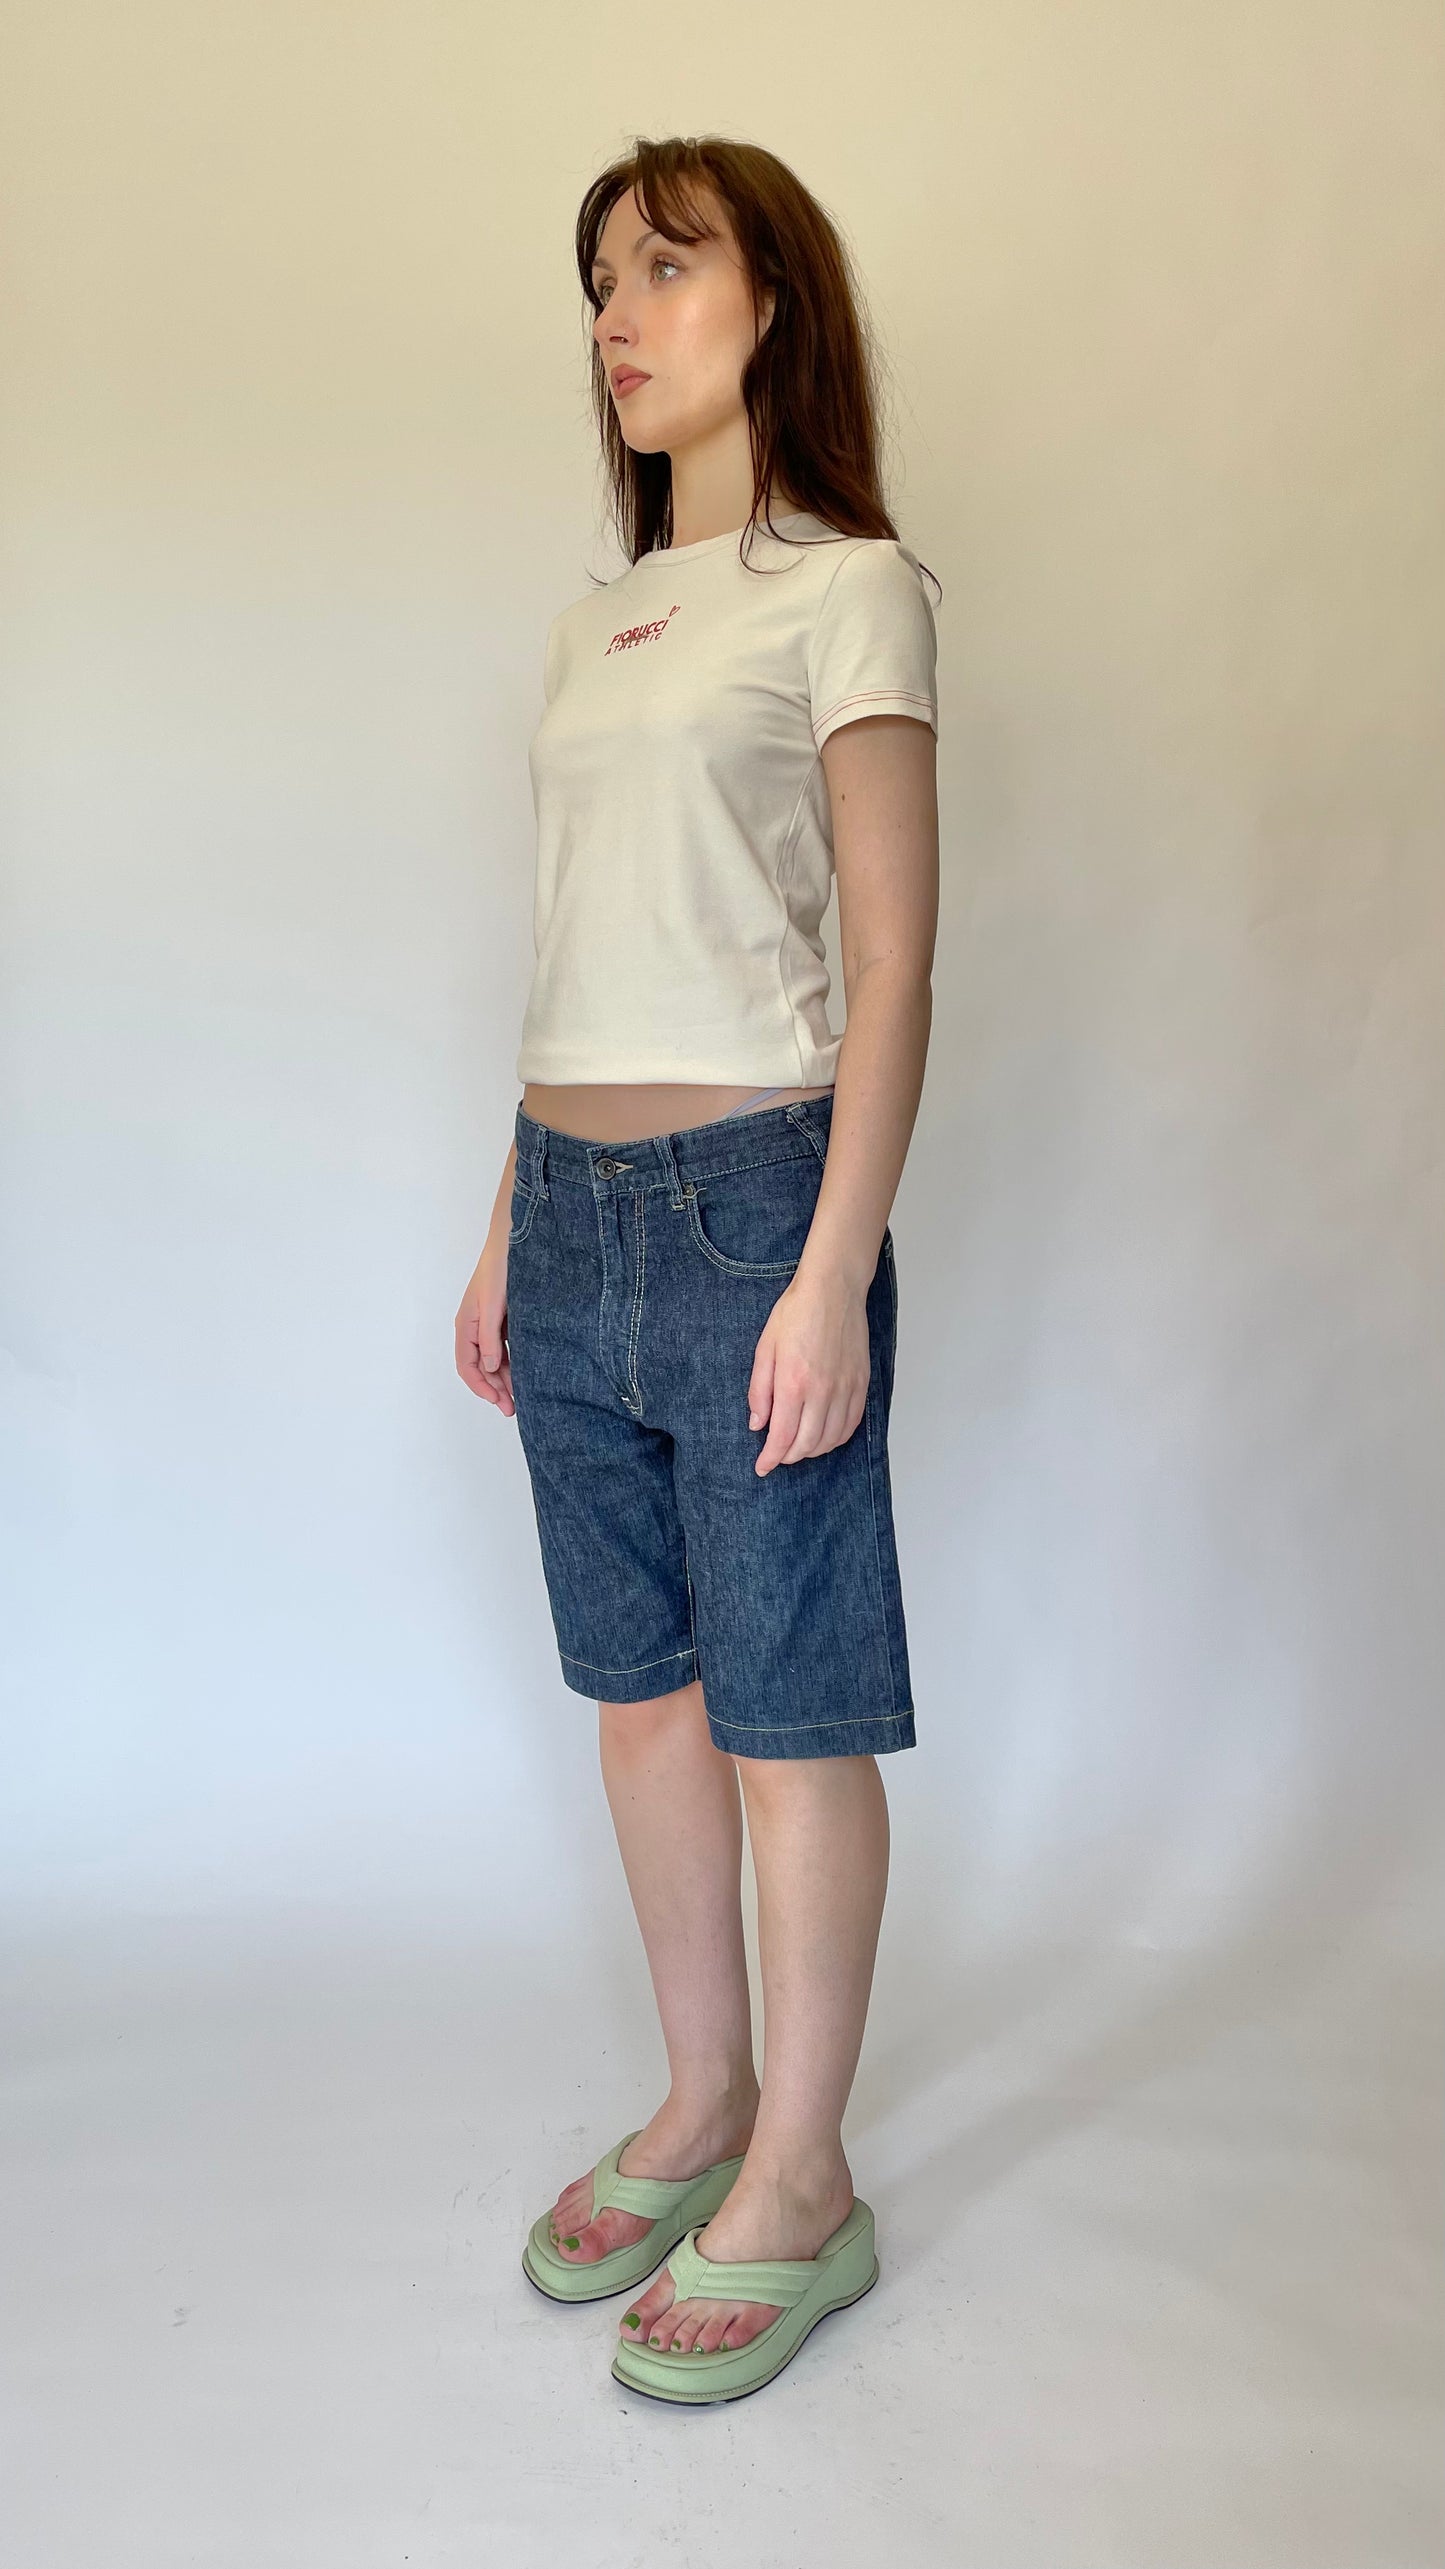 Armani Jeans denim shorts (size 32)